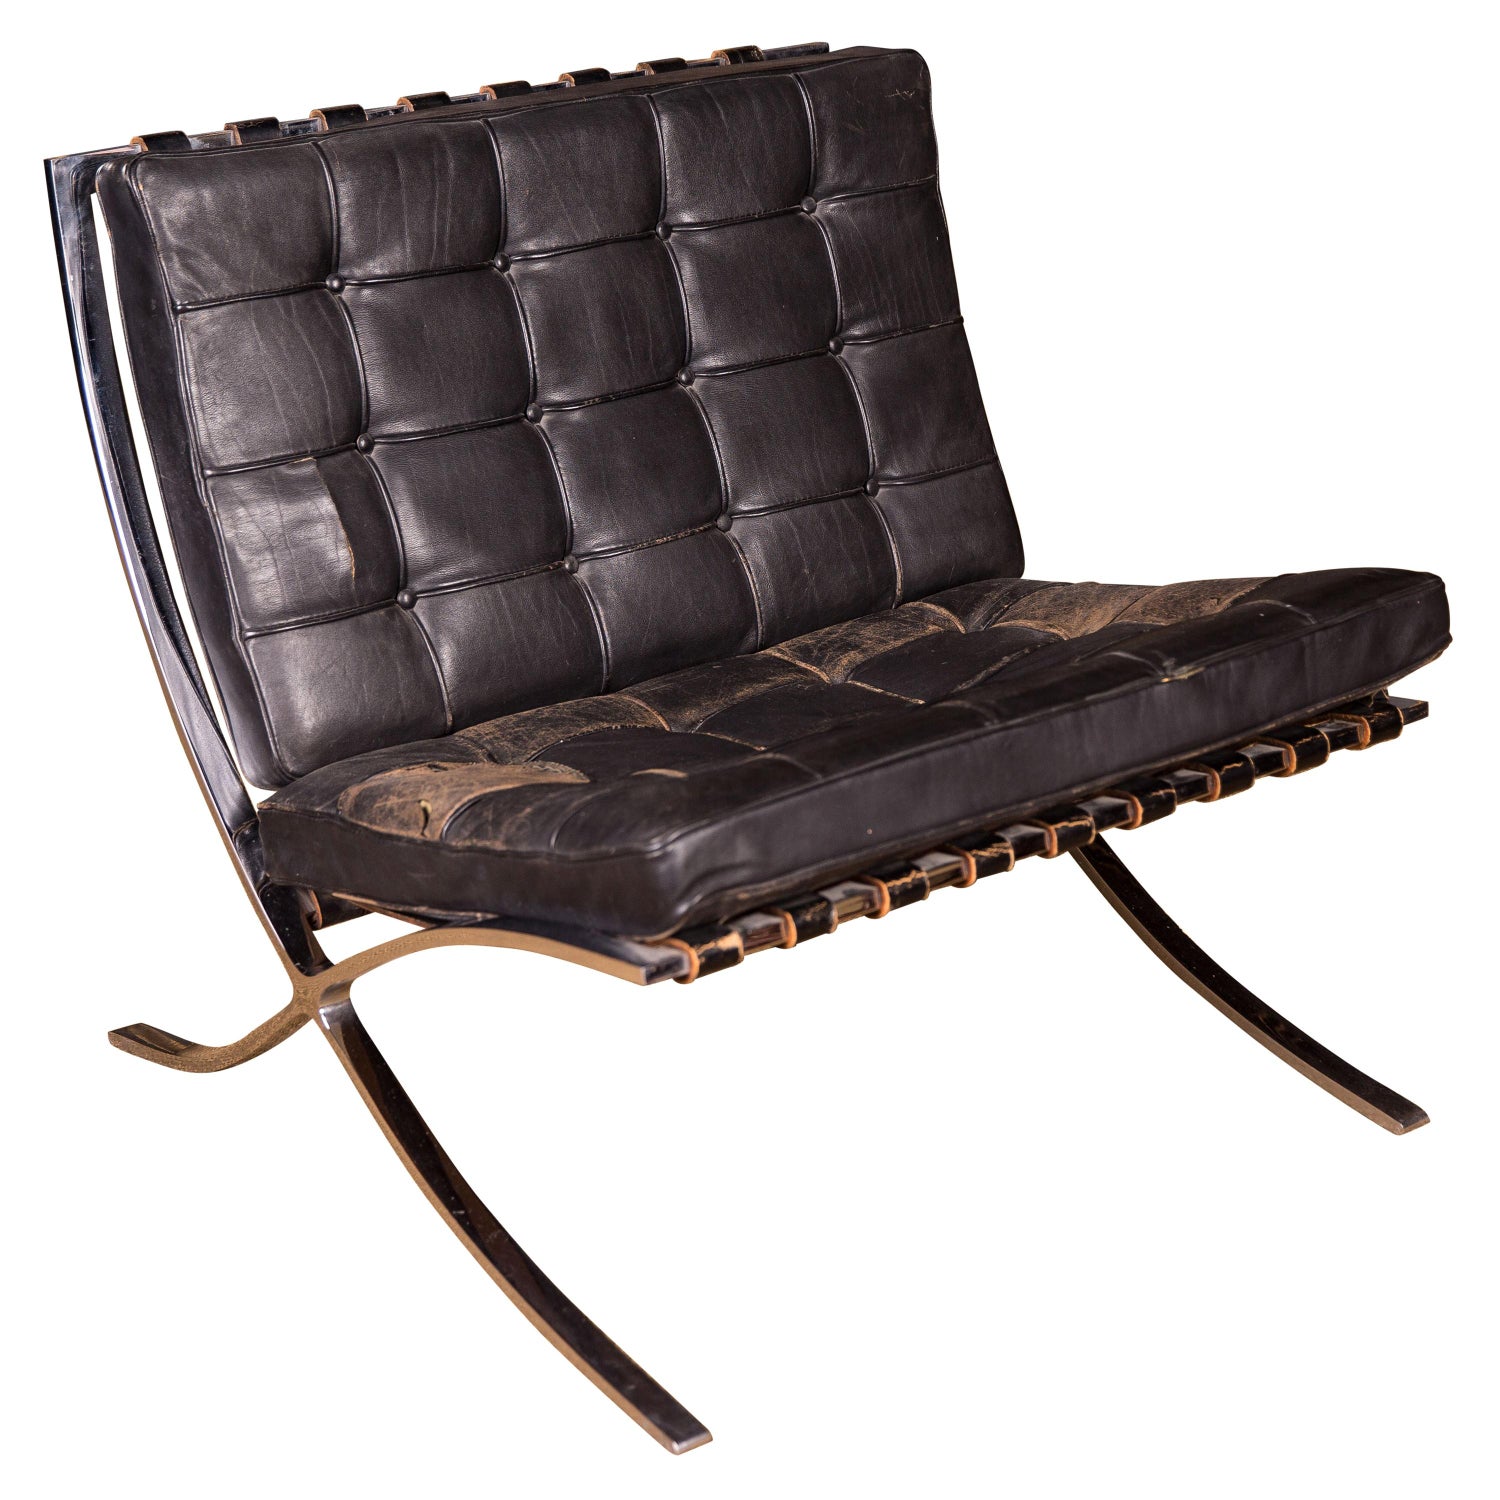 Original Barcelona Chair Design by Mies van der Rohe For Sale at 1stDibs |  barcelona chair original, mies van der rohe chair, vintage barcelona chair